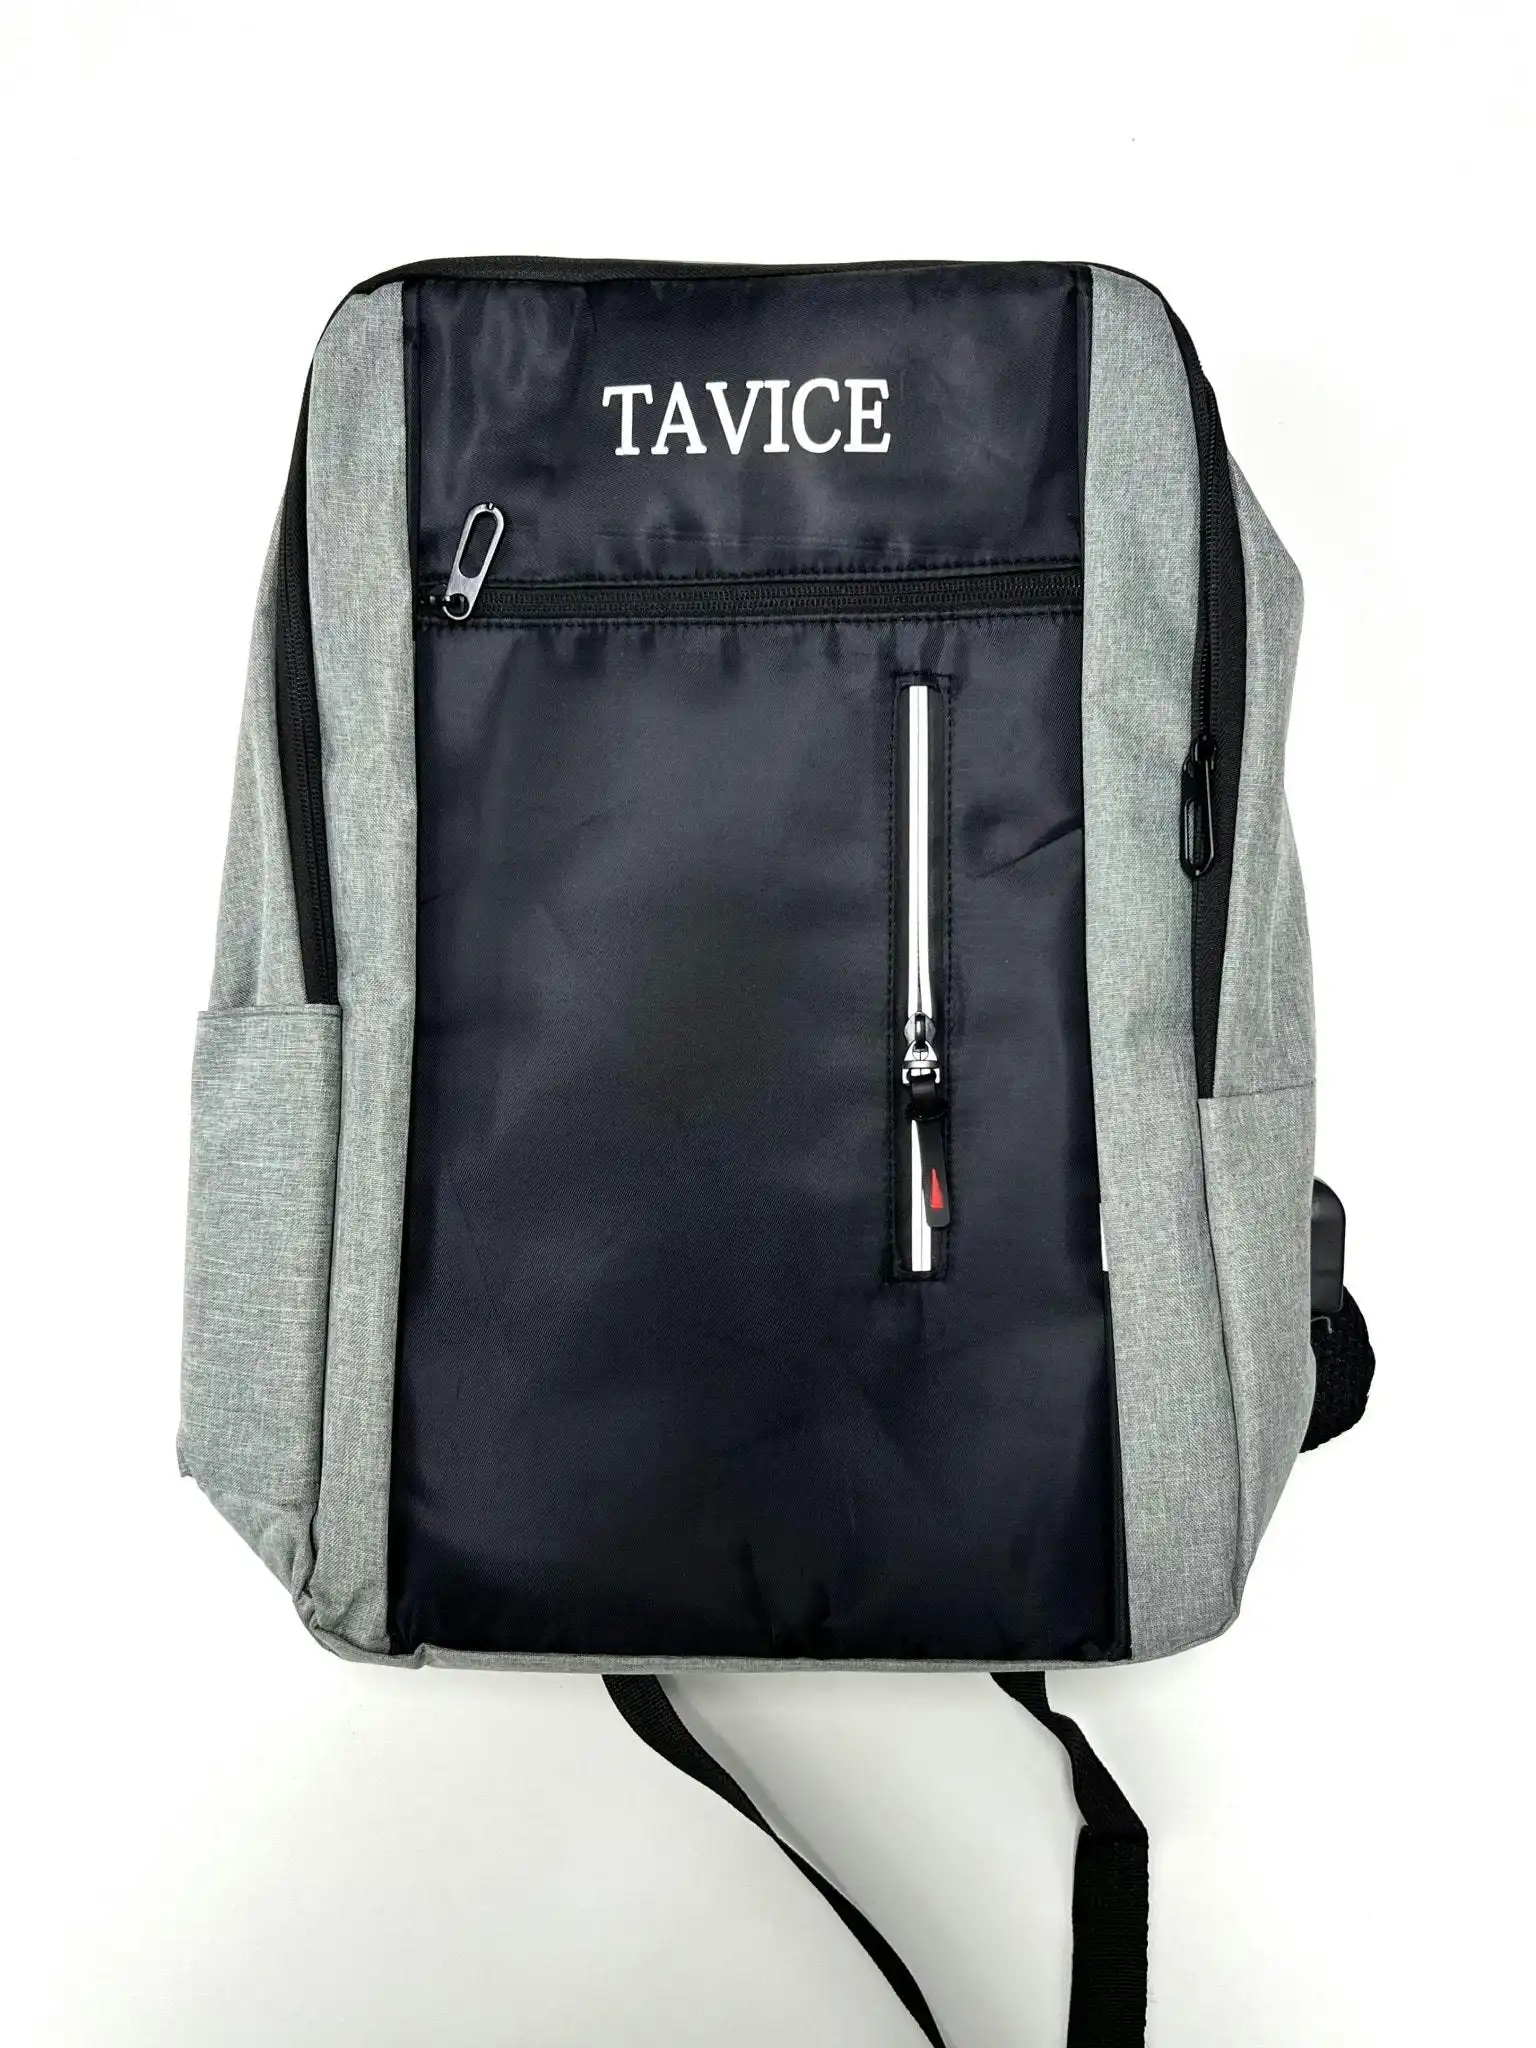 TAVICE Anti-theft Backpack USB Charging Waterproof Laptop Travel Shoulder Bag Outdoor